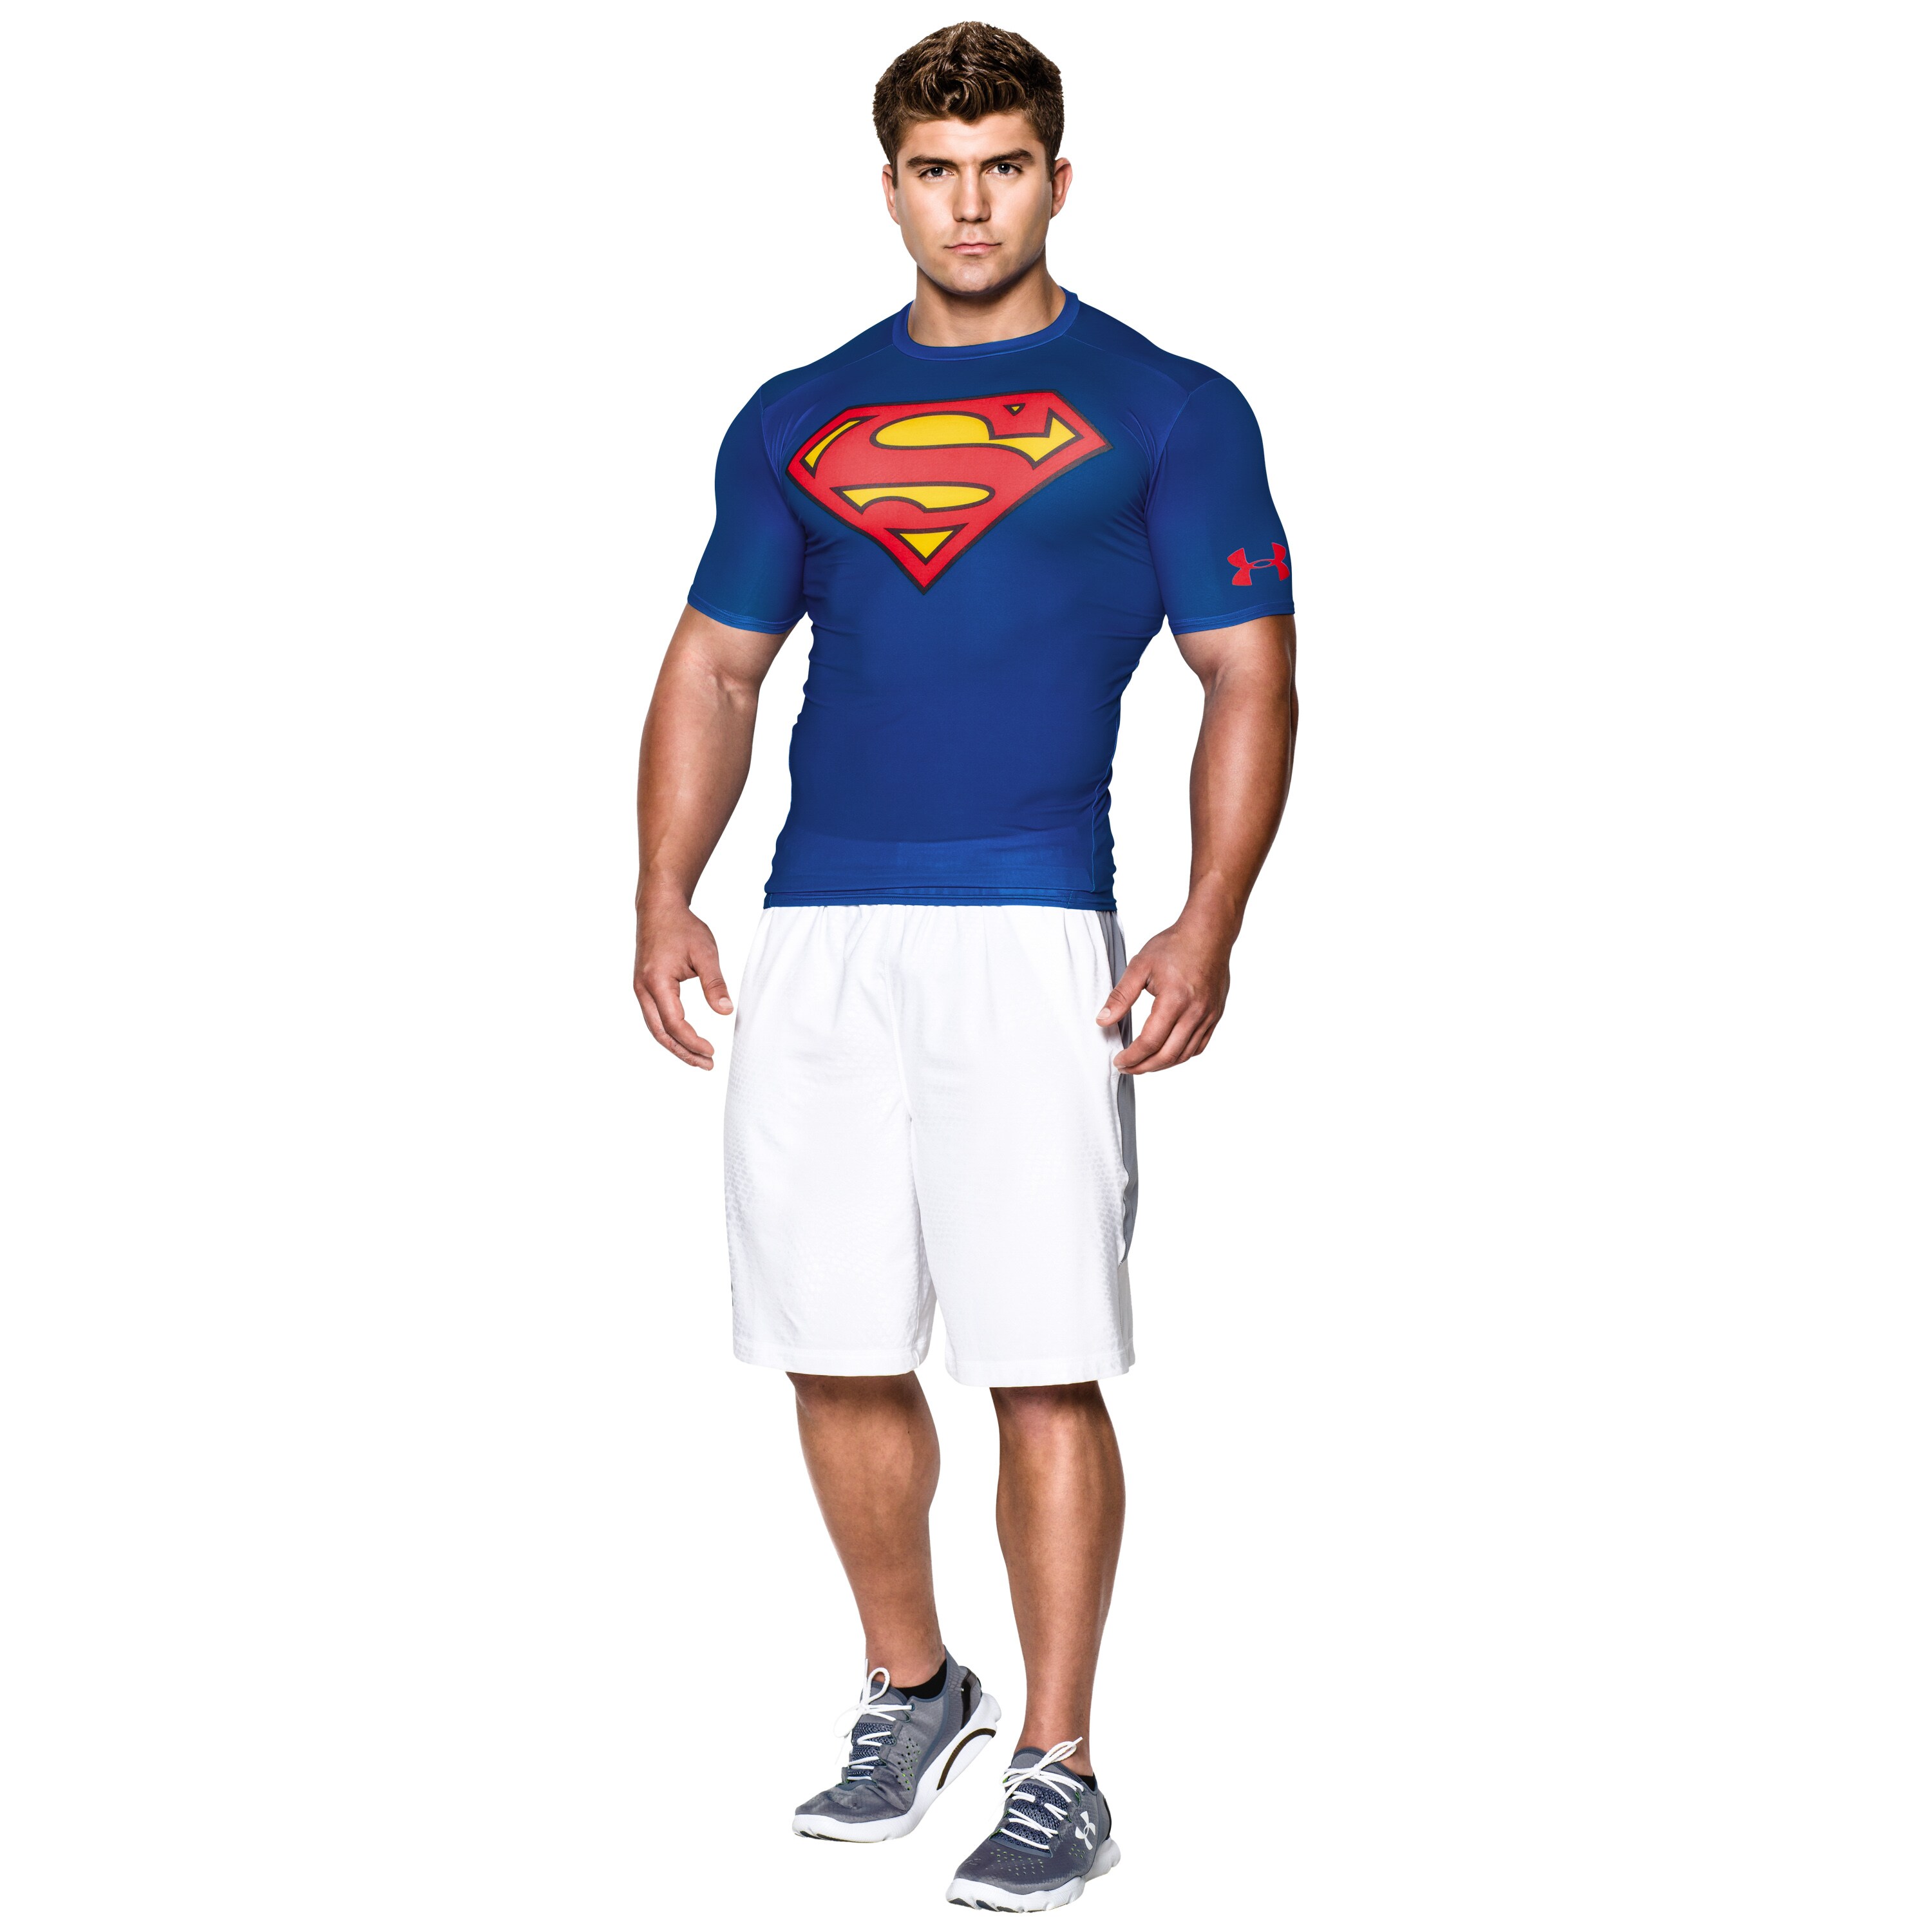 Arenoso Amperio colateral Camiseta Under Armour Alter Ego Superman azul